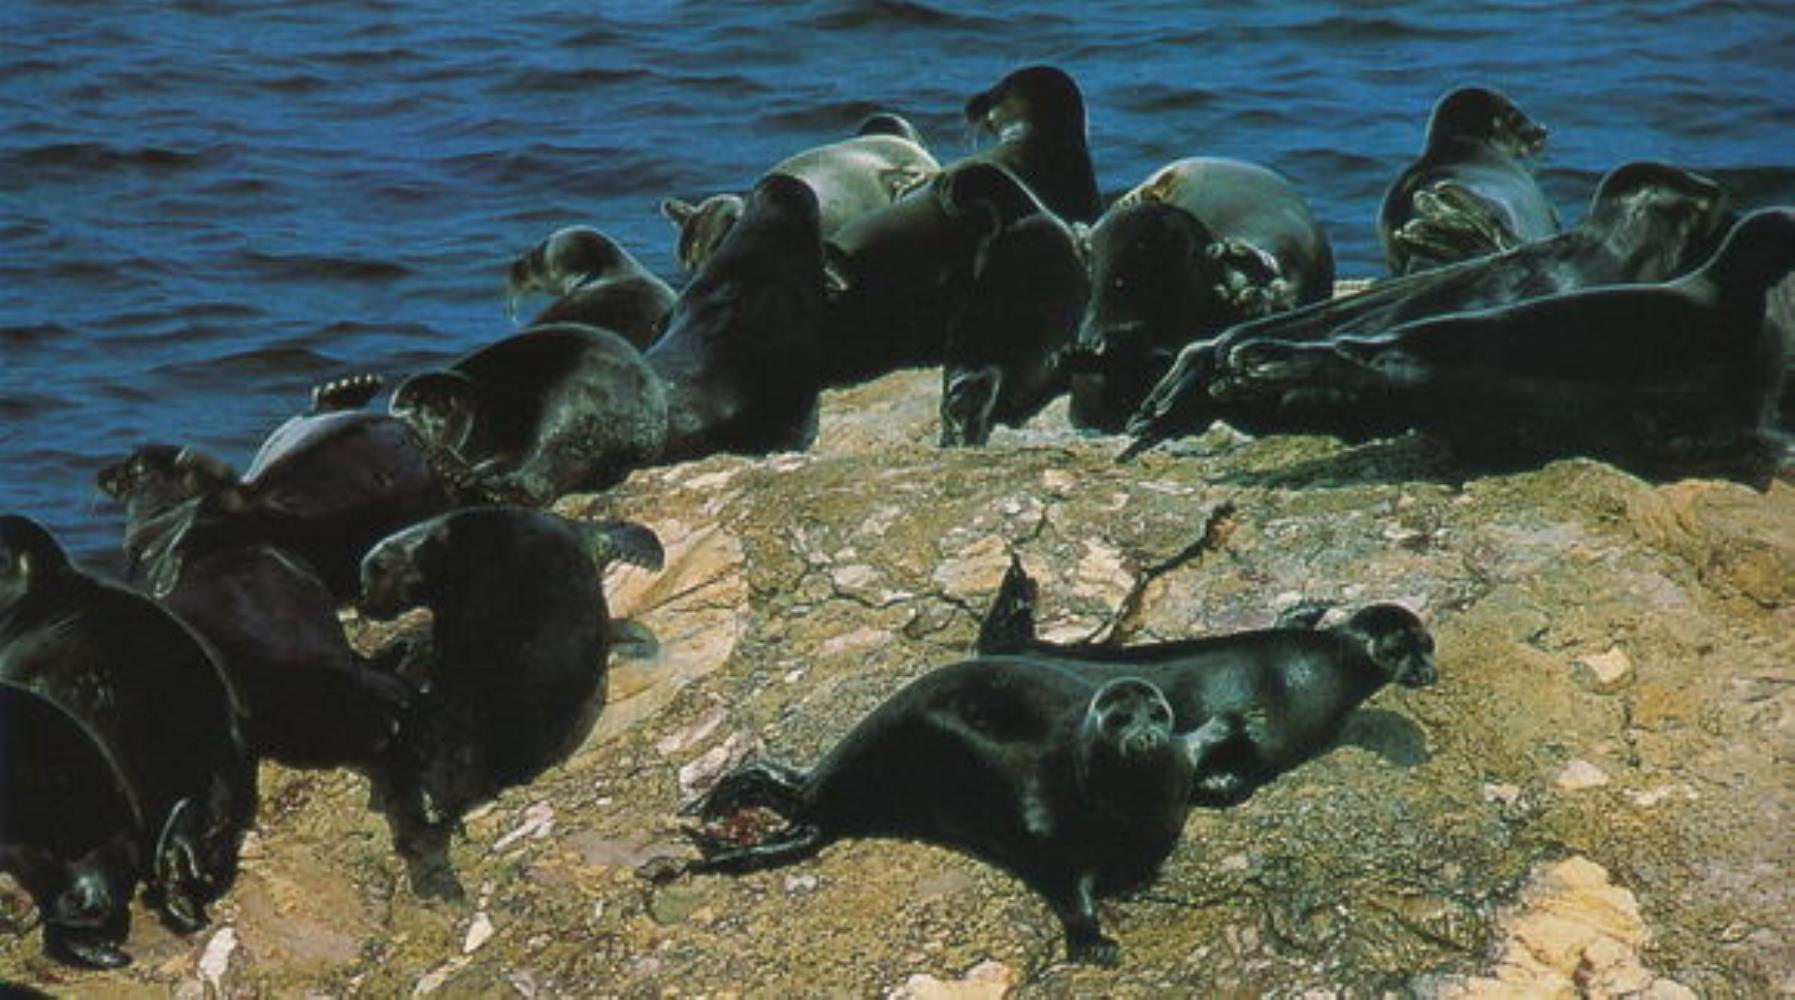 Baikal Seal